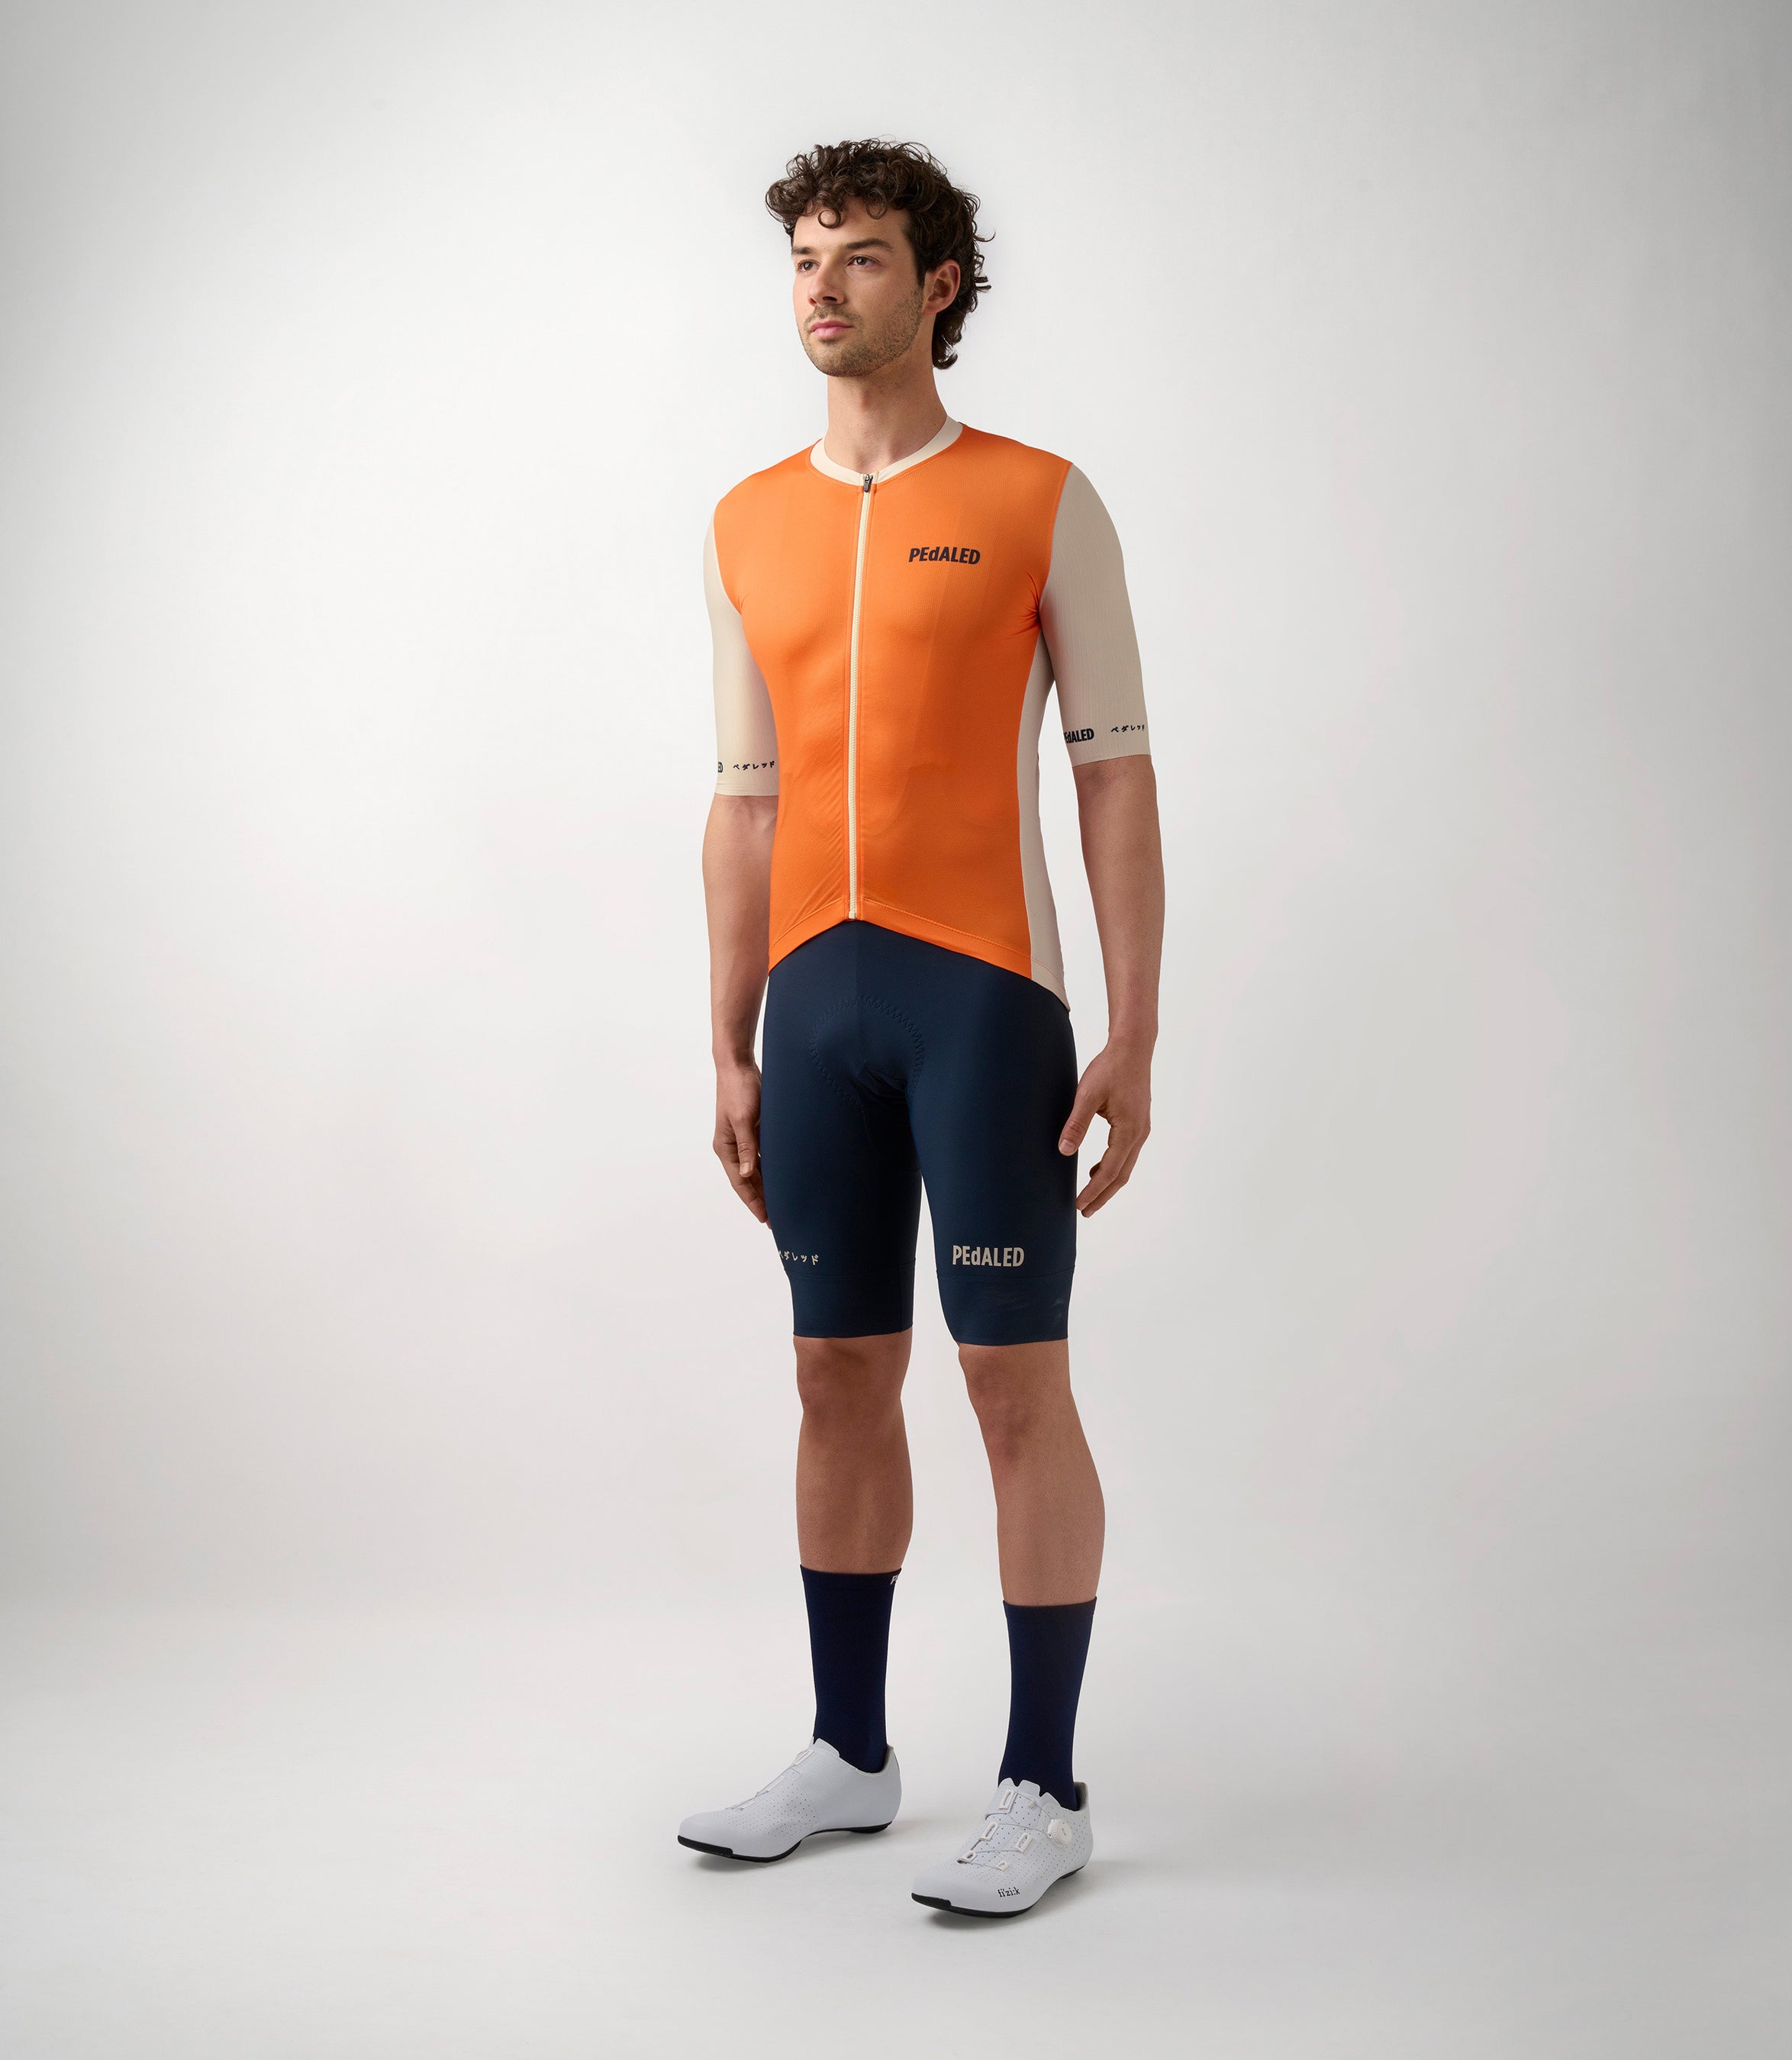 23SJSLO0HPE_3_men cycling jersey logo orange total body front pedaled